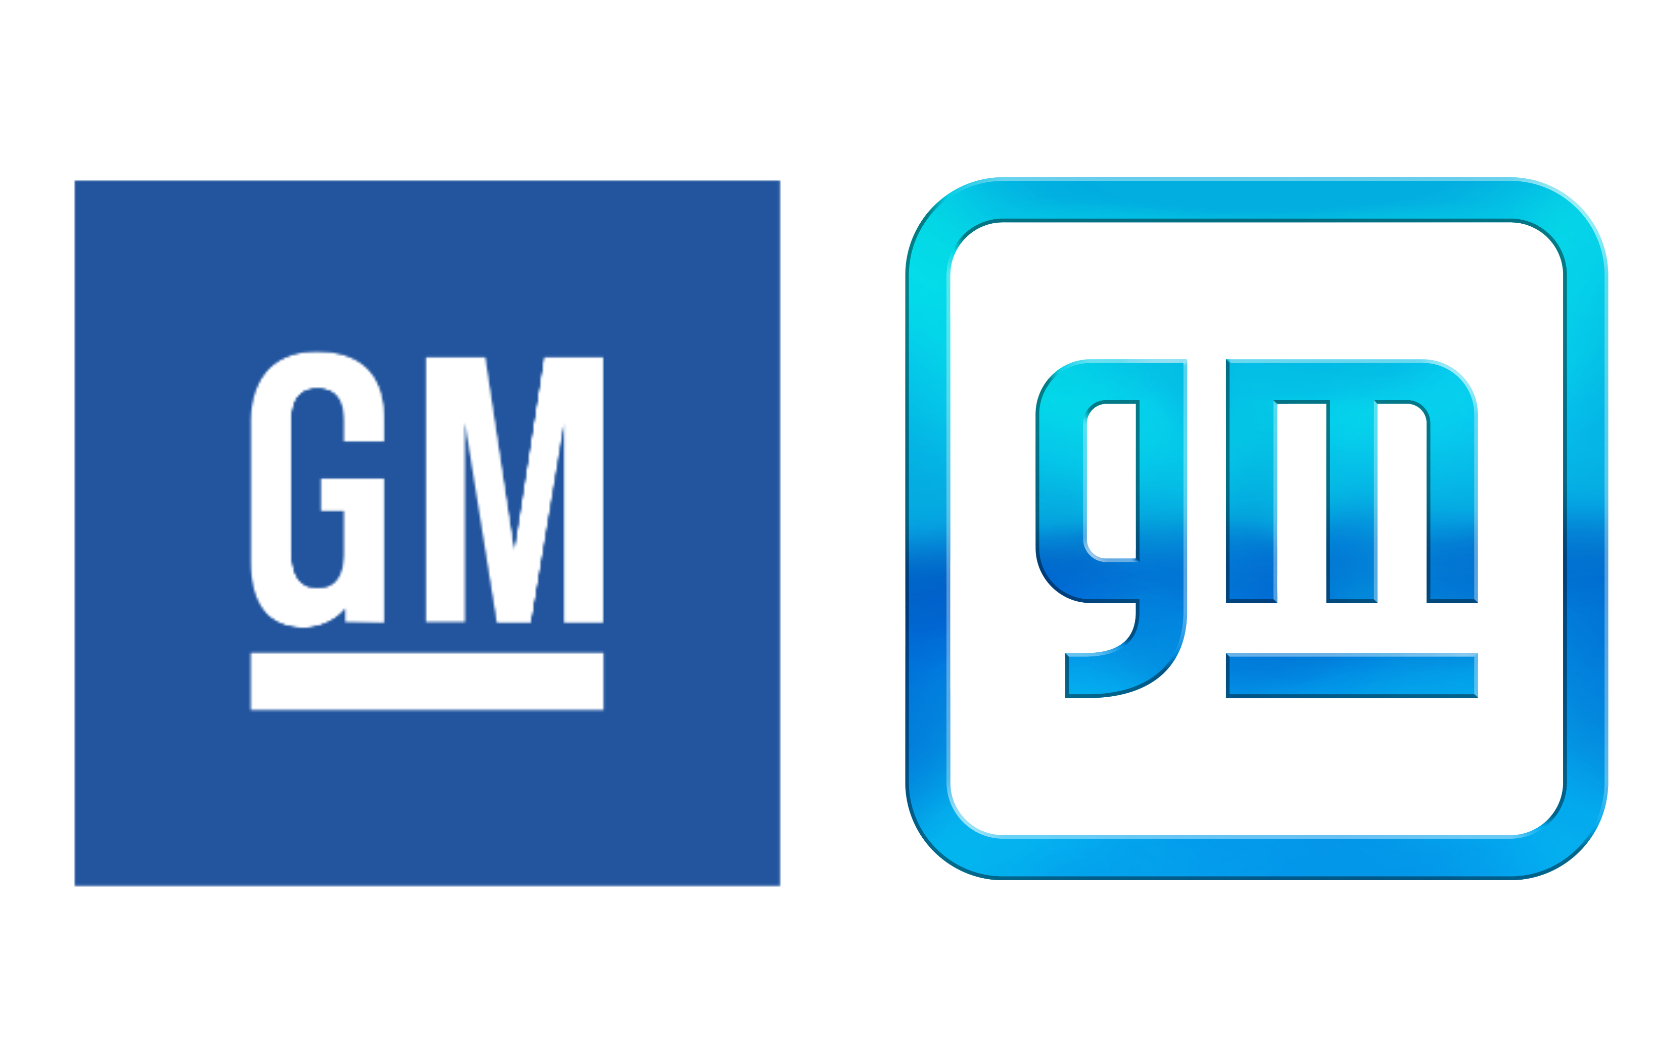 MSG Logo PNG Transparent & SVG Vector - Freebie Supply